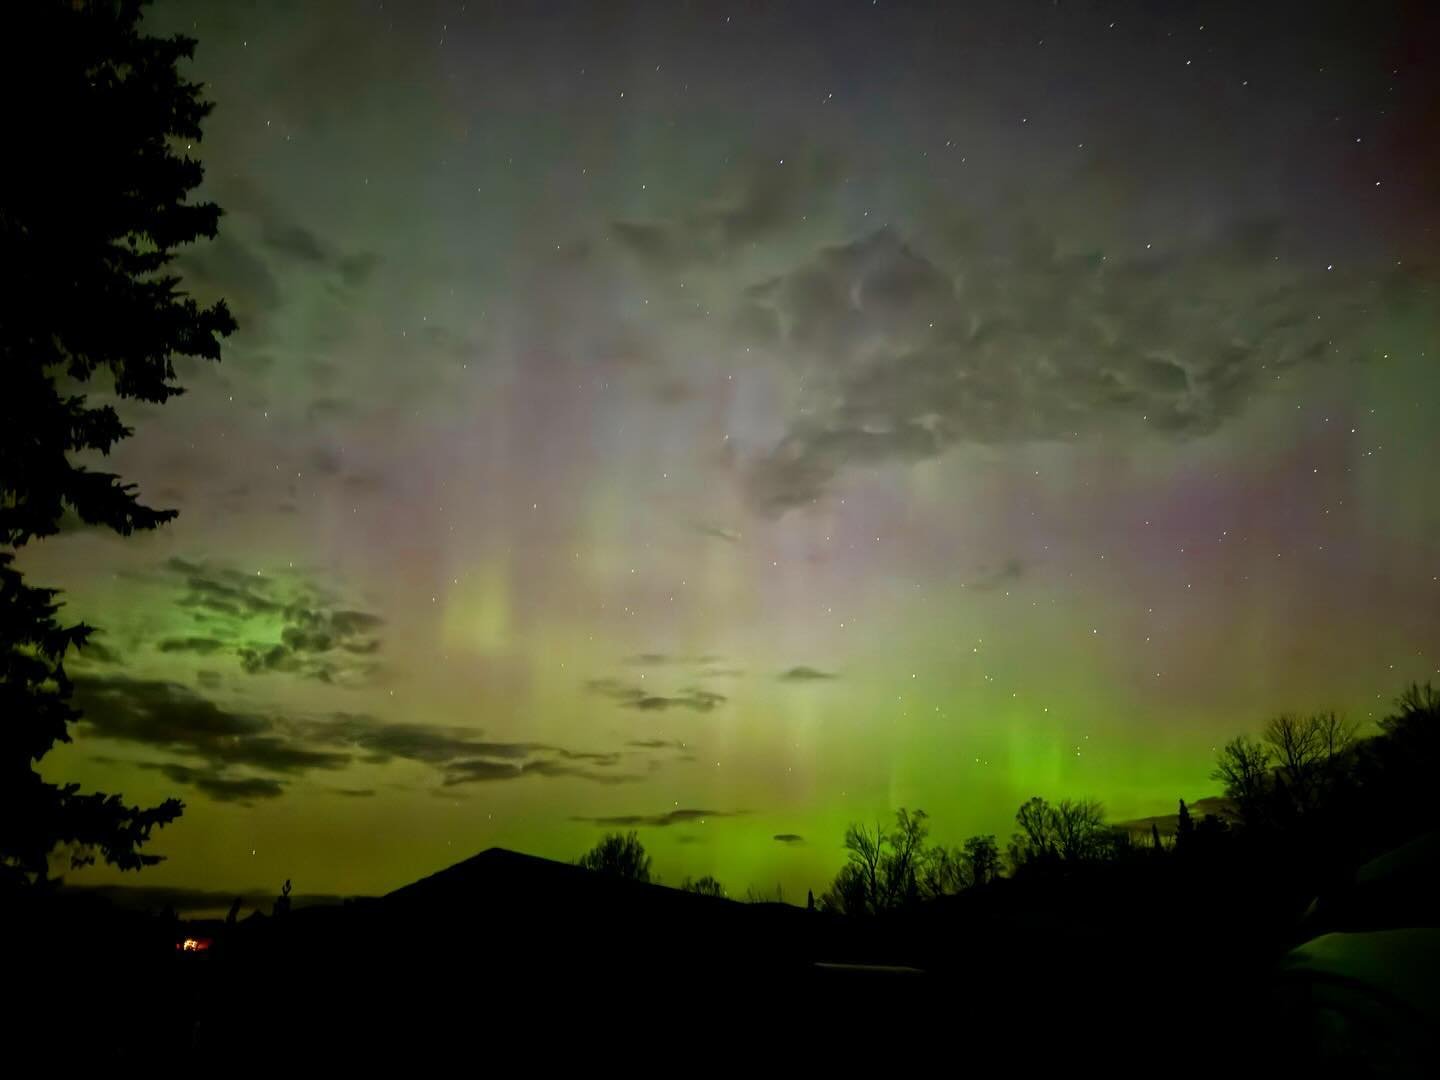 A little clearer!

#aurora
#auroraborealis 
#northernlights 
#vermontskies
#nightsky
#northernsky
#broadforkvt